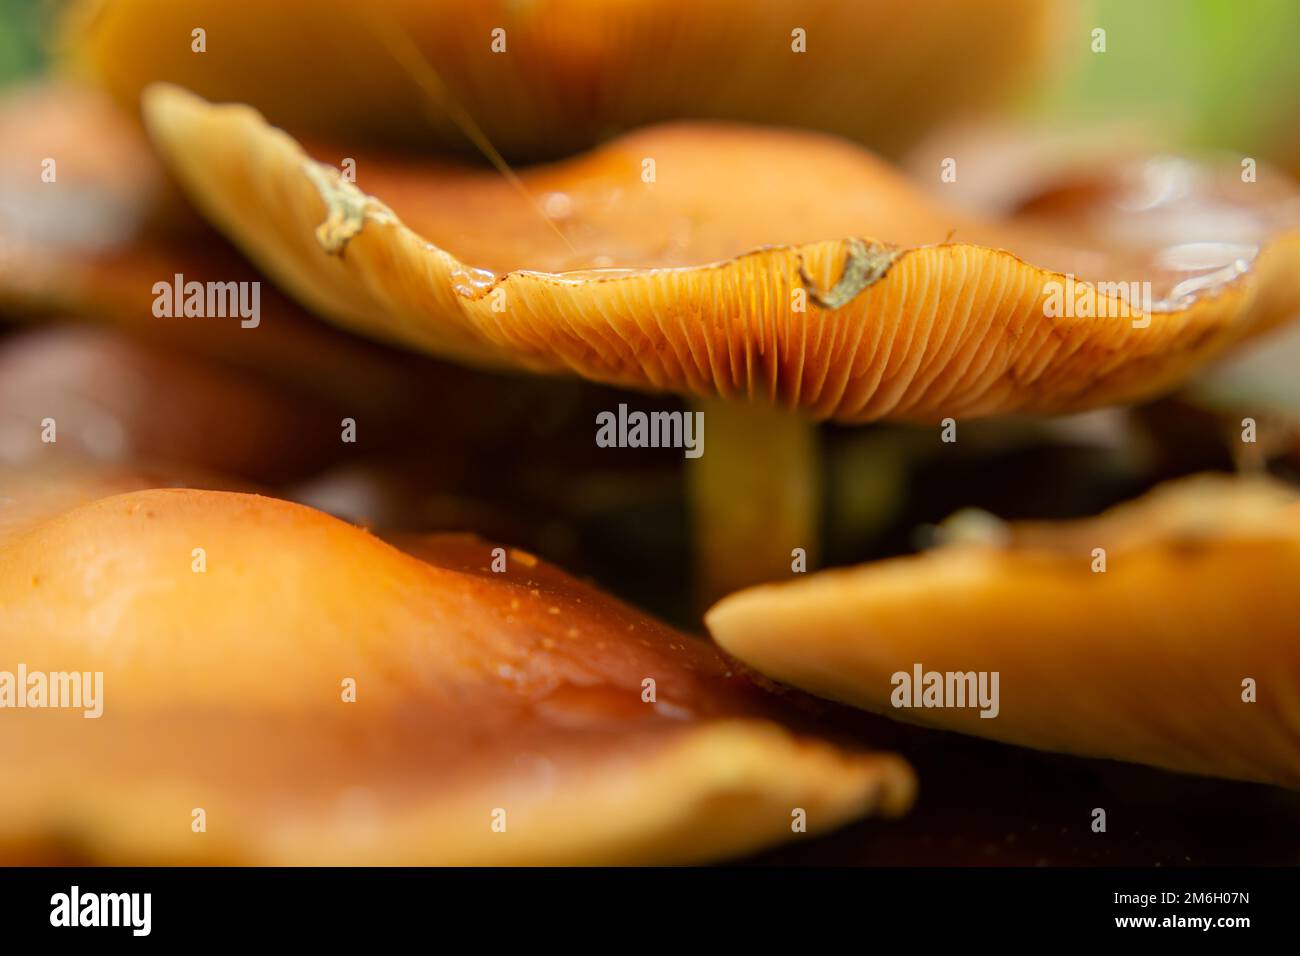 Wild forest orange mushrooms with large caps Stock Photo